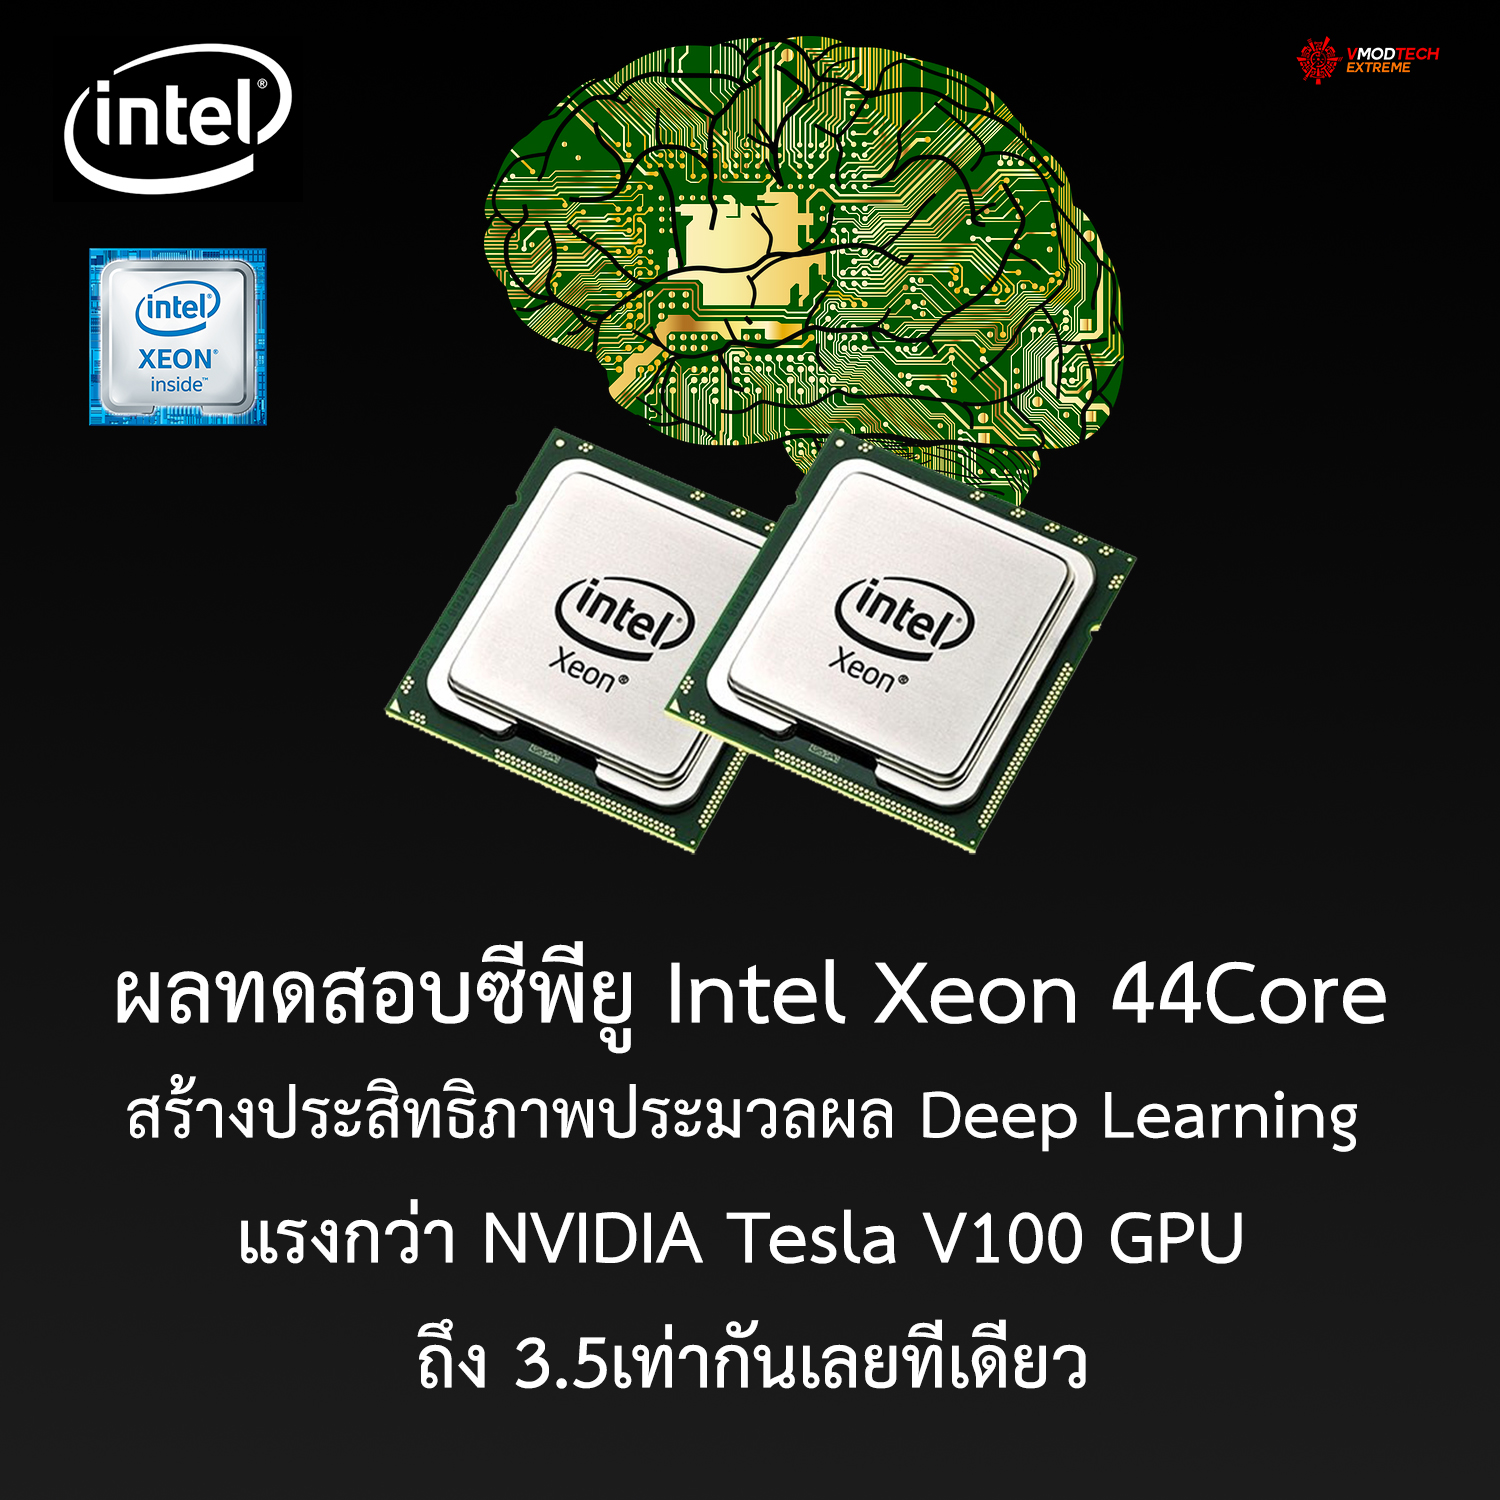 intel xeon deep learning breakthrough ซีพียู Intel Xeon 44Core สร้างประสิทธิภาพประมวลผล Deep Learning แรงกว่า NVIDIA Tesla V100 GPU ถึง 3.5เท่ากันเลยทีเดียว